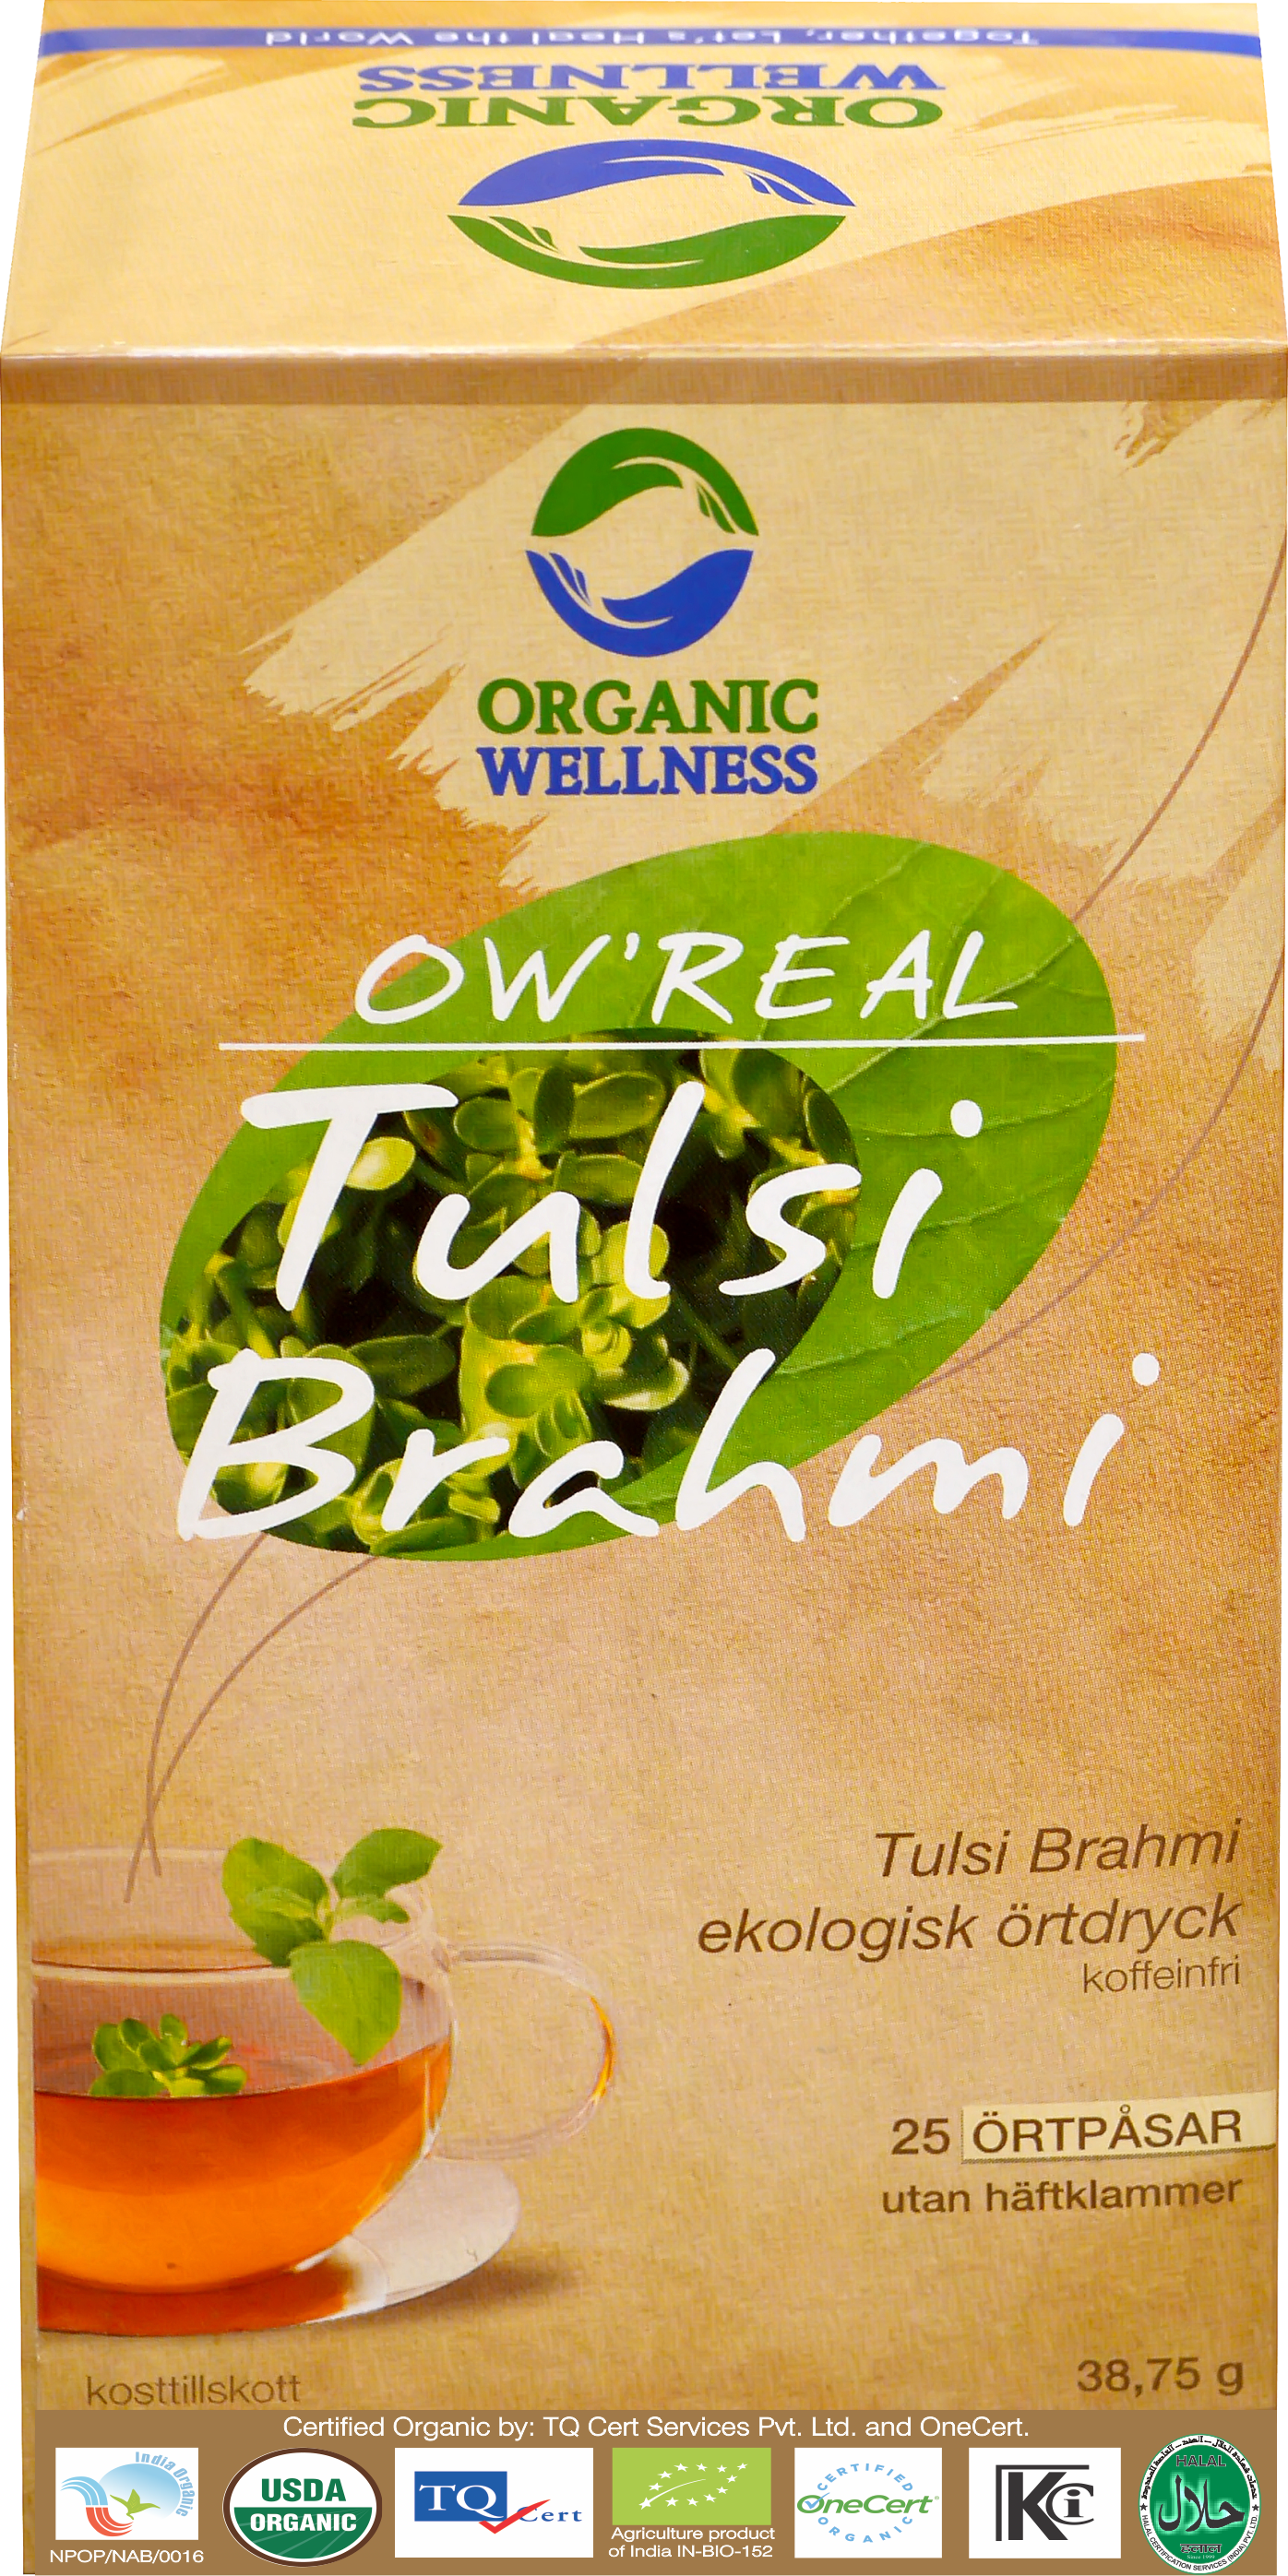 Buy Organic Wellness Real Tulsi Brahmi Tea at Best Price Online